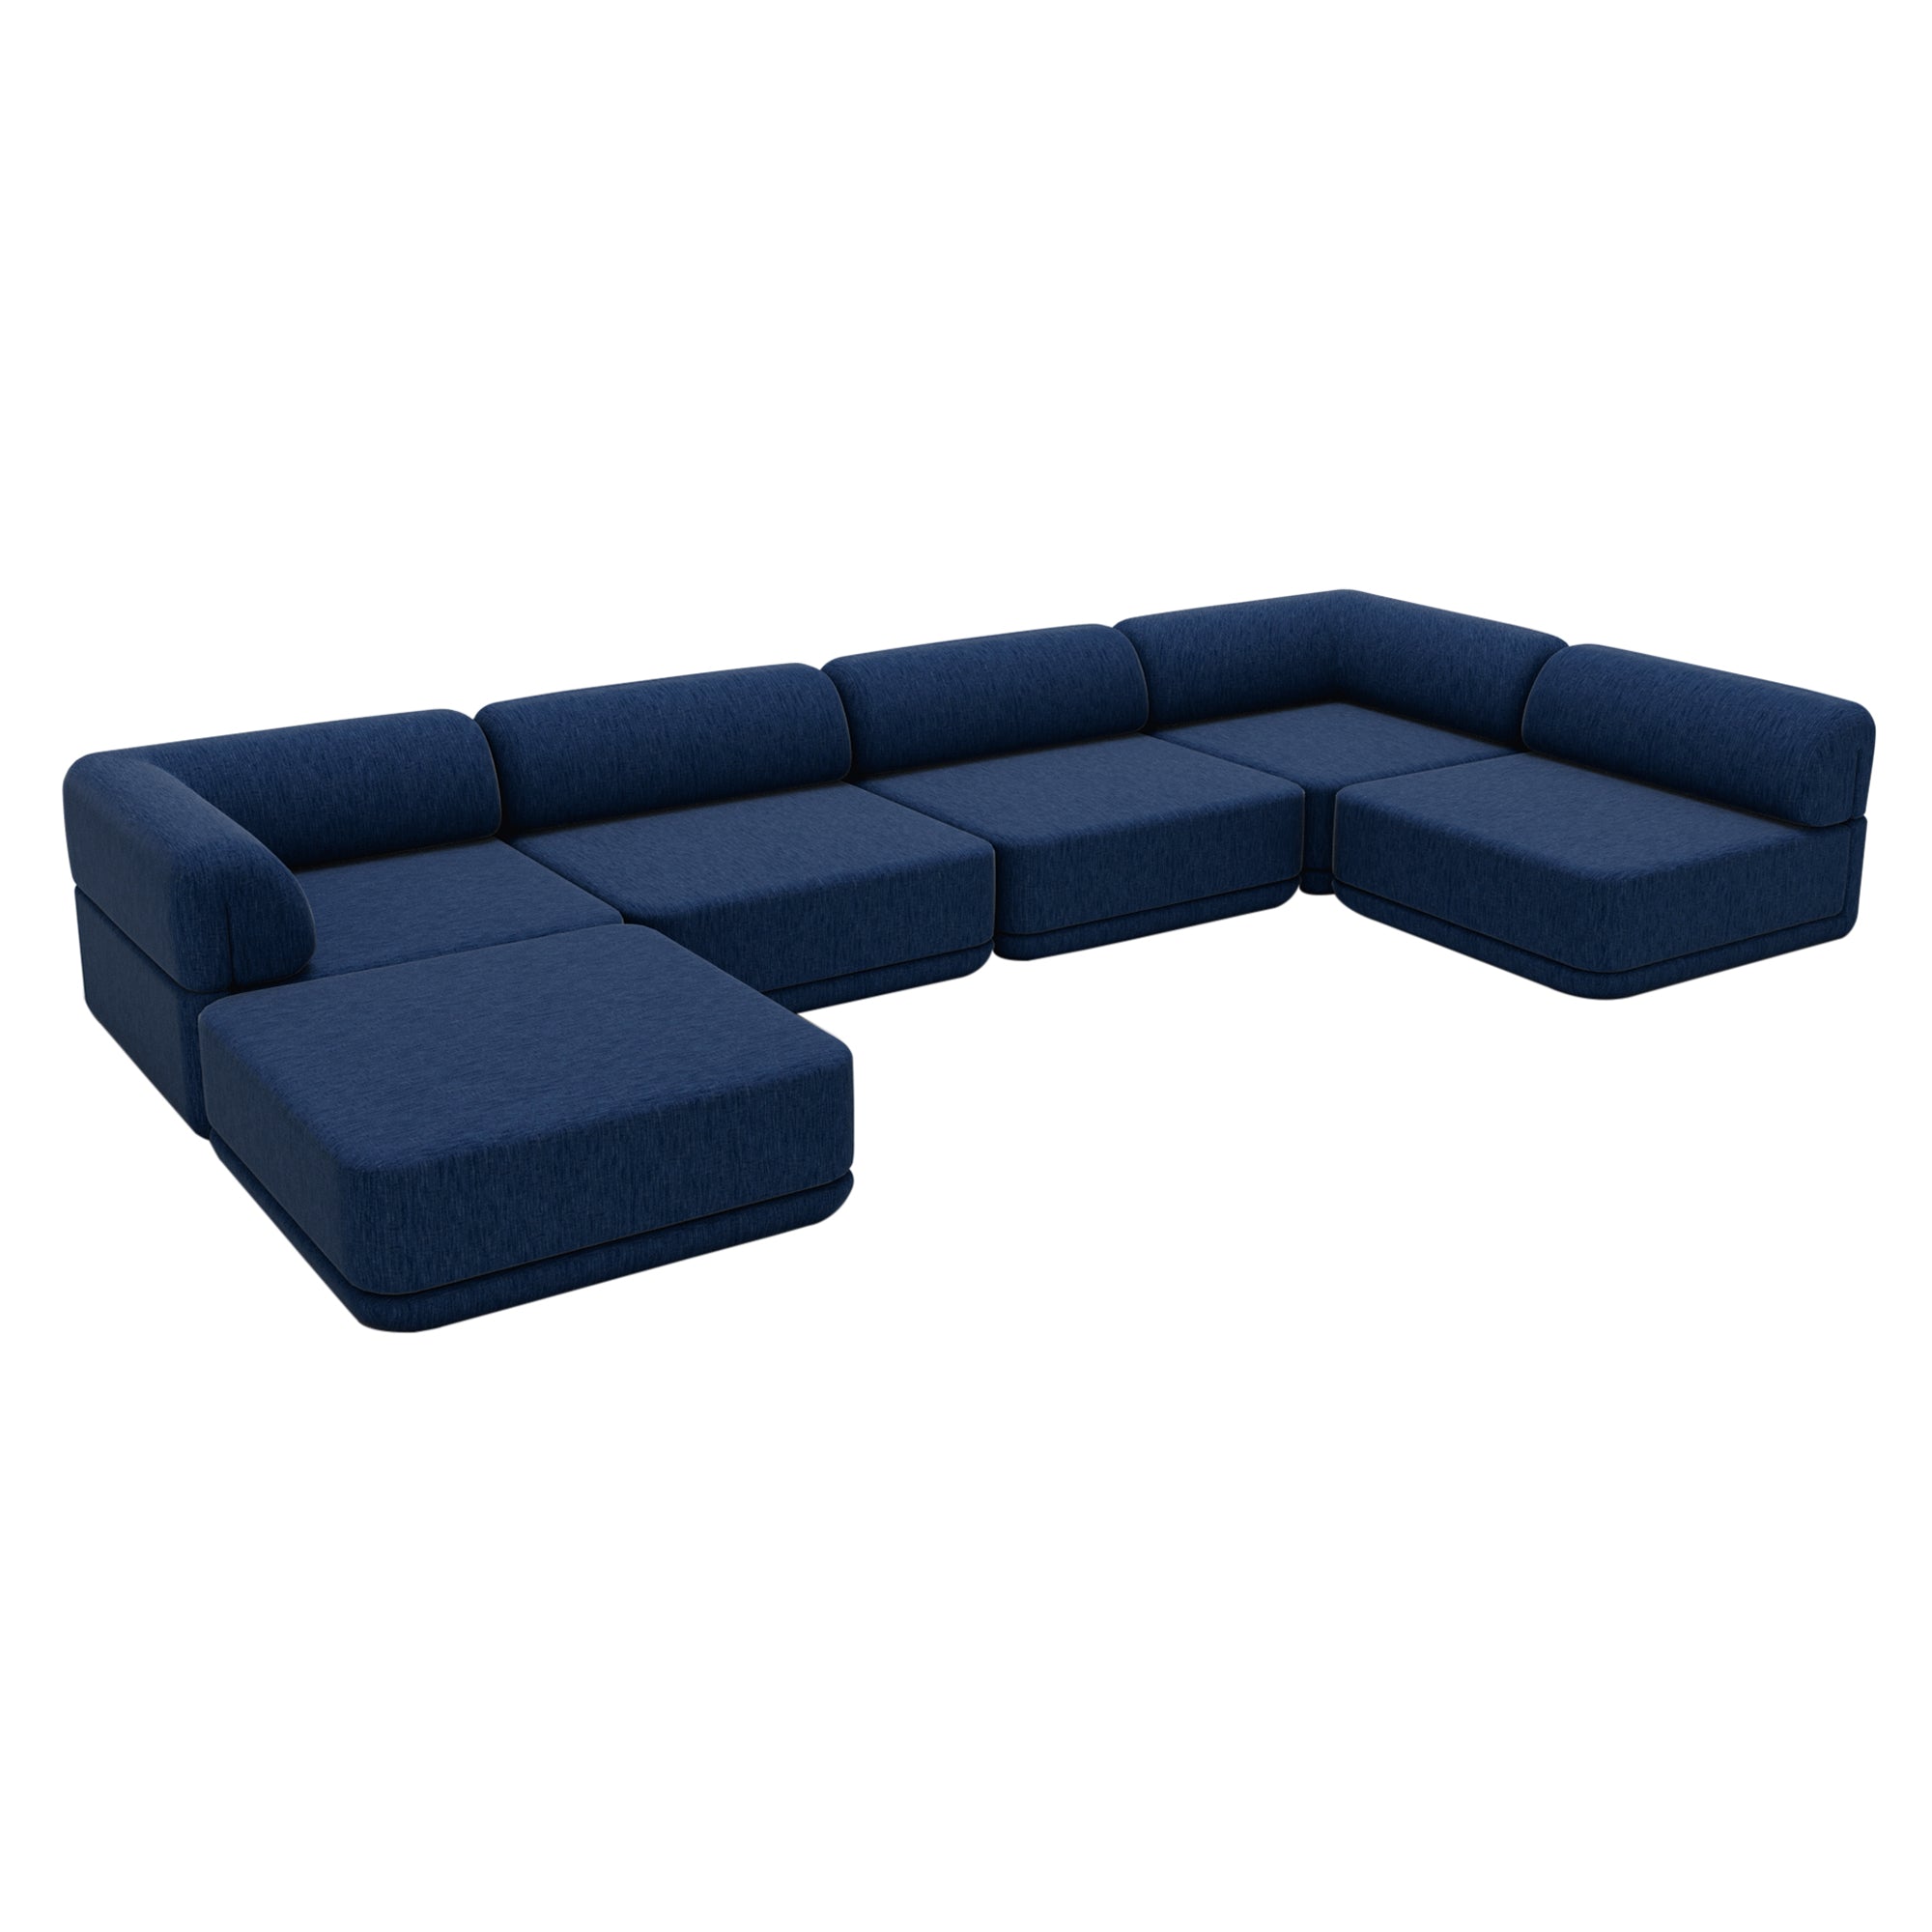 Cube Modular Sofa: Configuration 9 + Chenille Navy